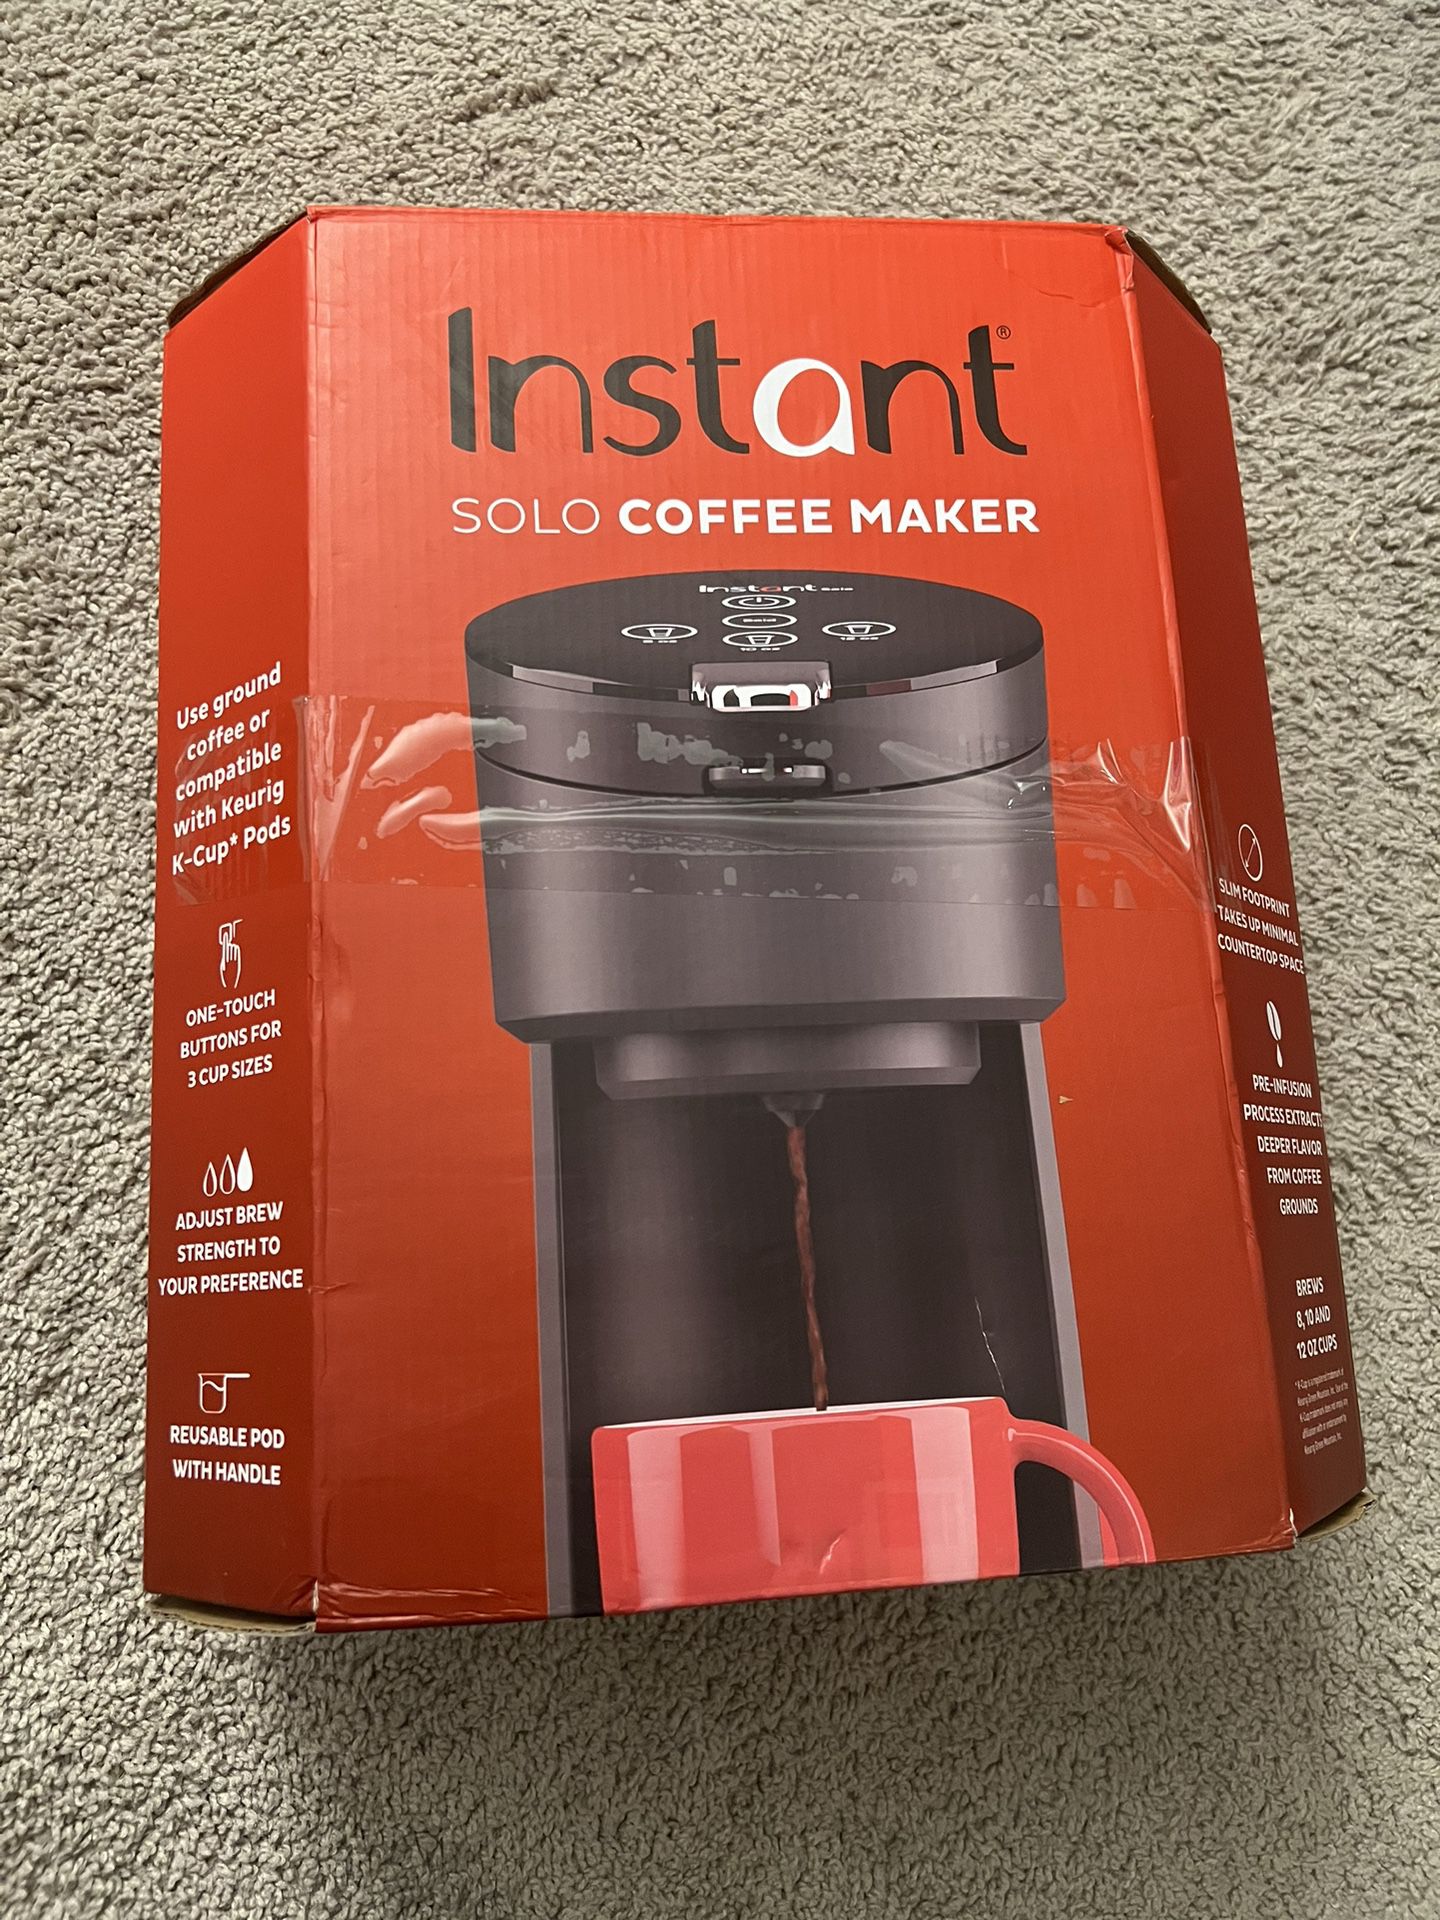 $25 Instant Pot Solo 2-In-1 Coffee Maker